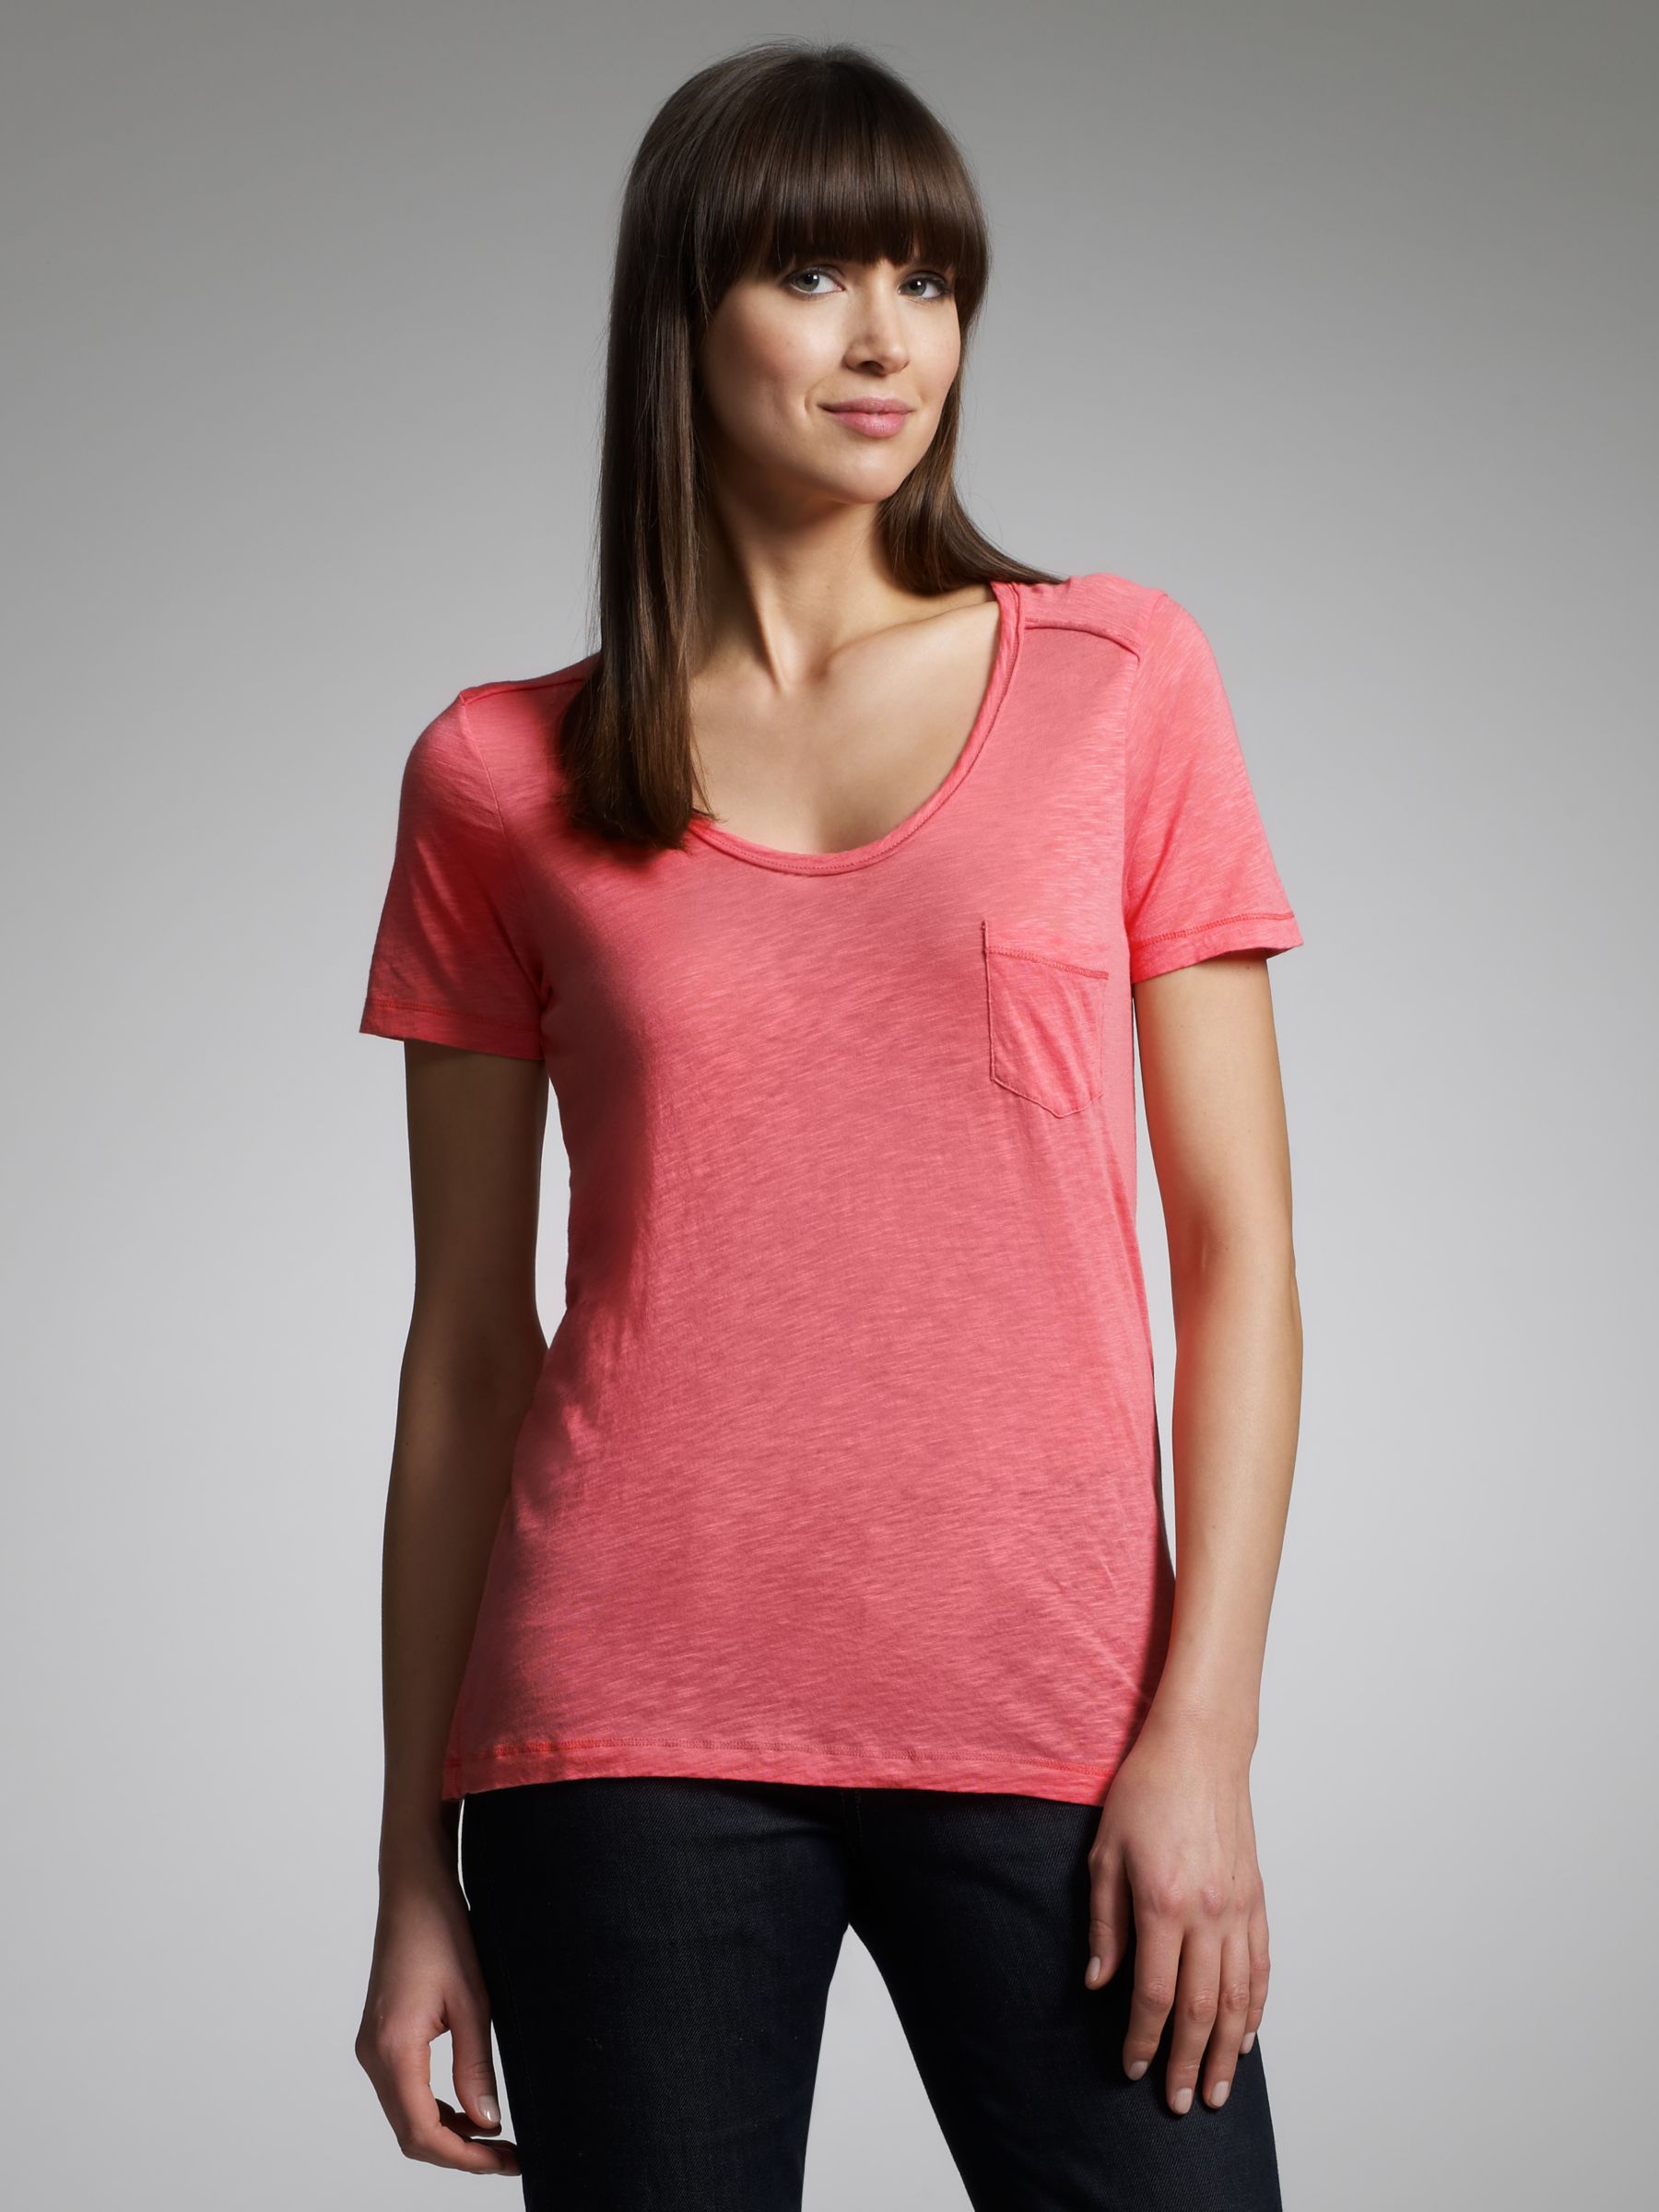 Freida Patch Pocket Cotton T-Shirt, Pink